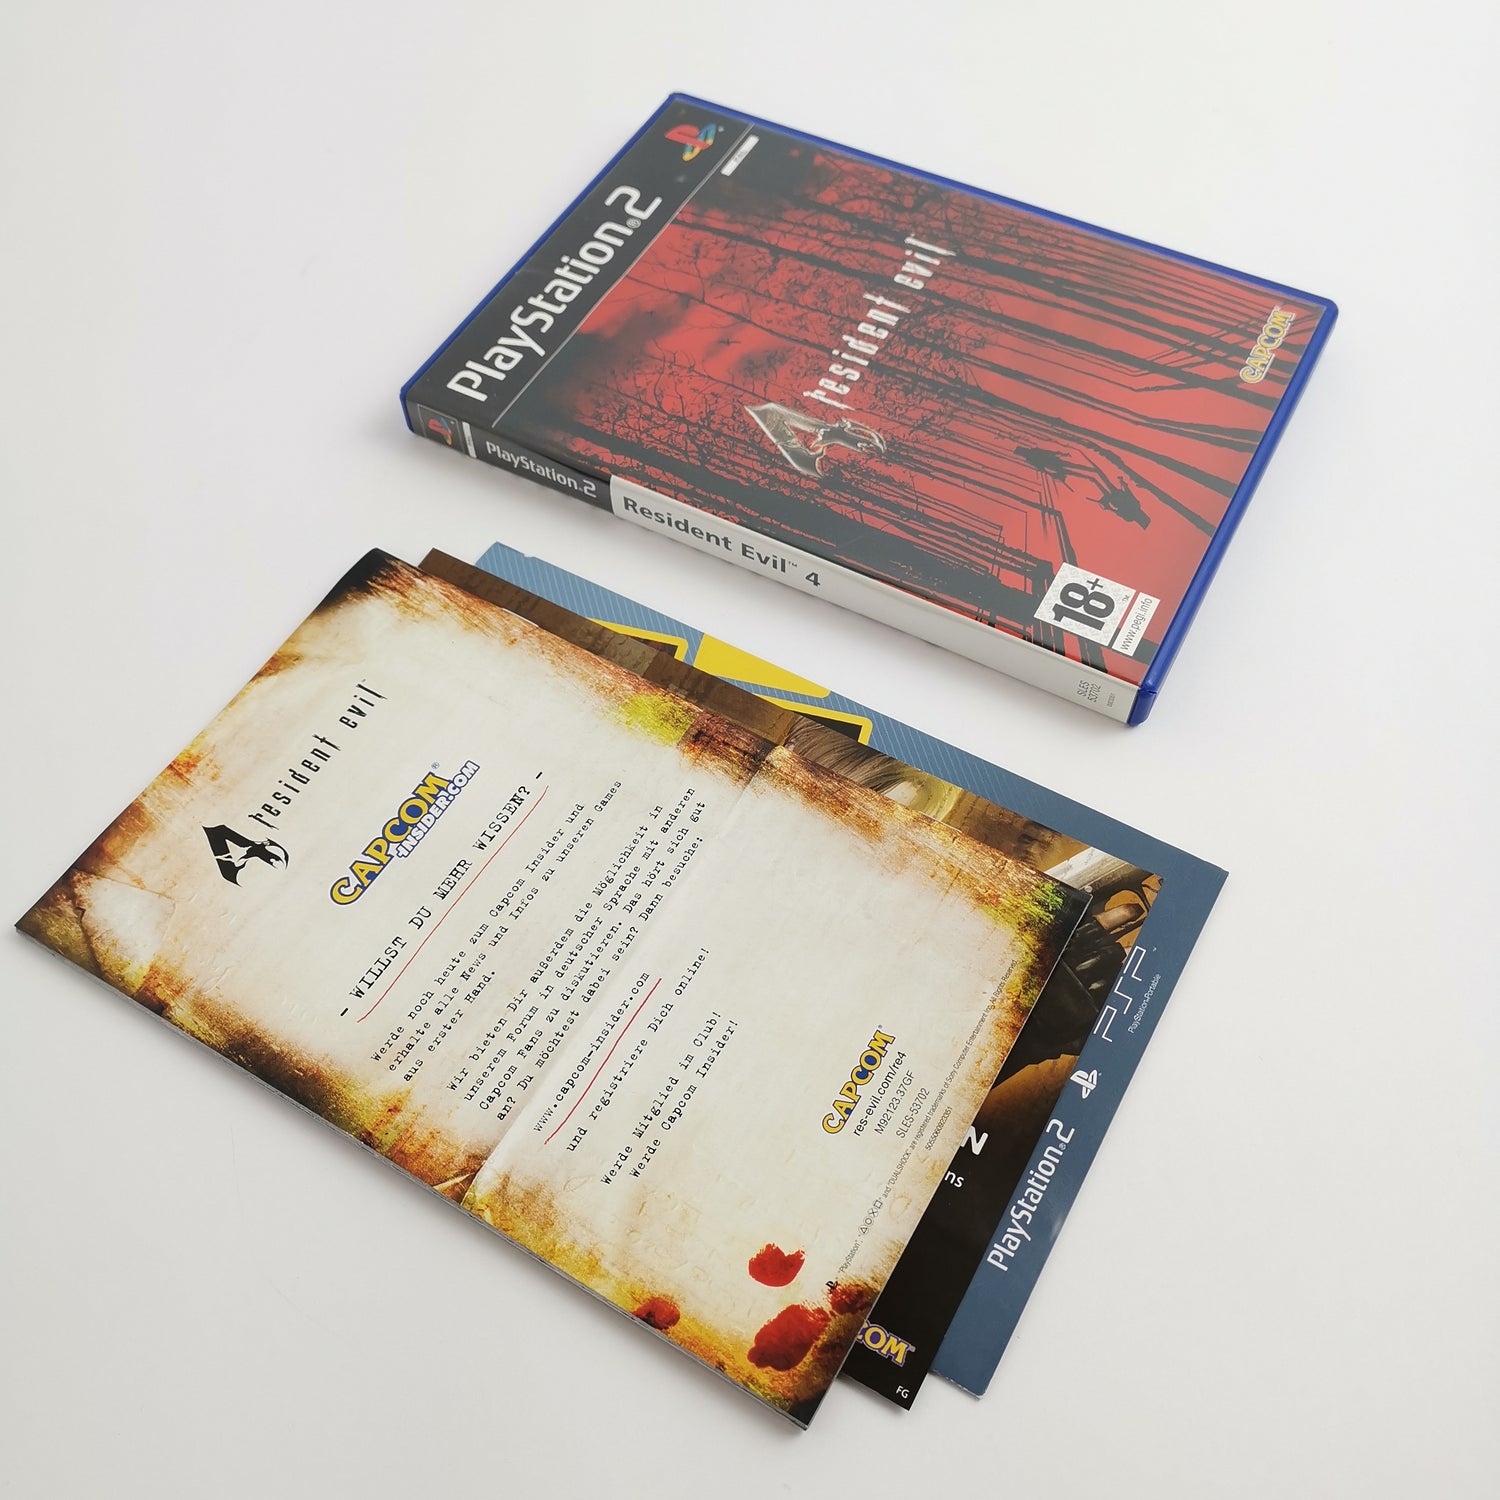 Sony Playstation 2 Game: Resident Evil 4 | PS2 - original packaging USK18